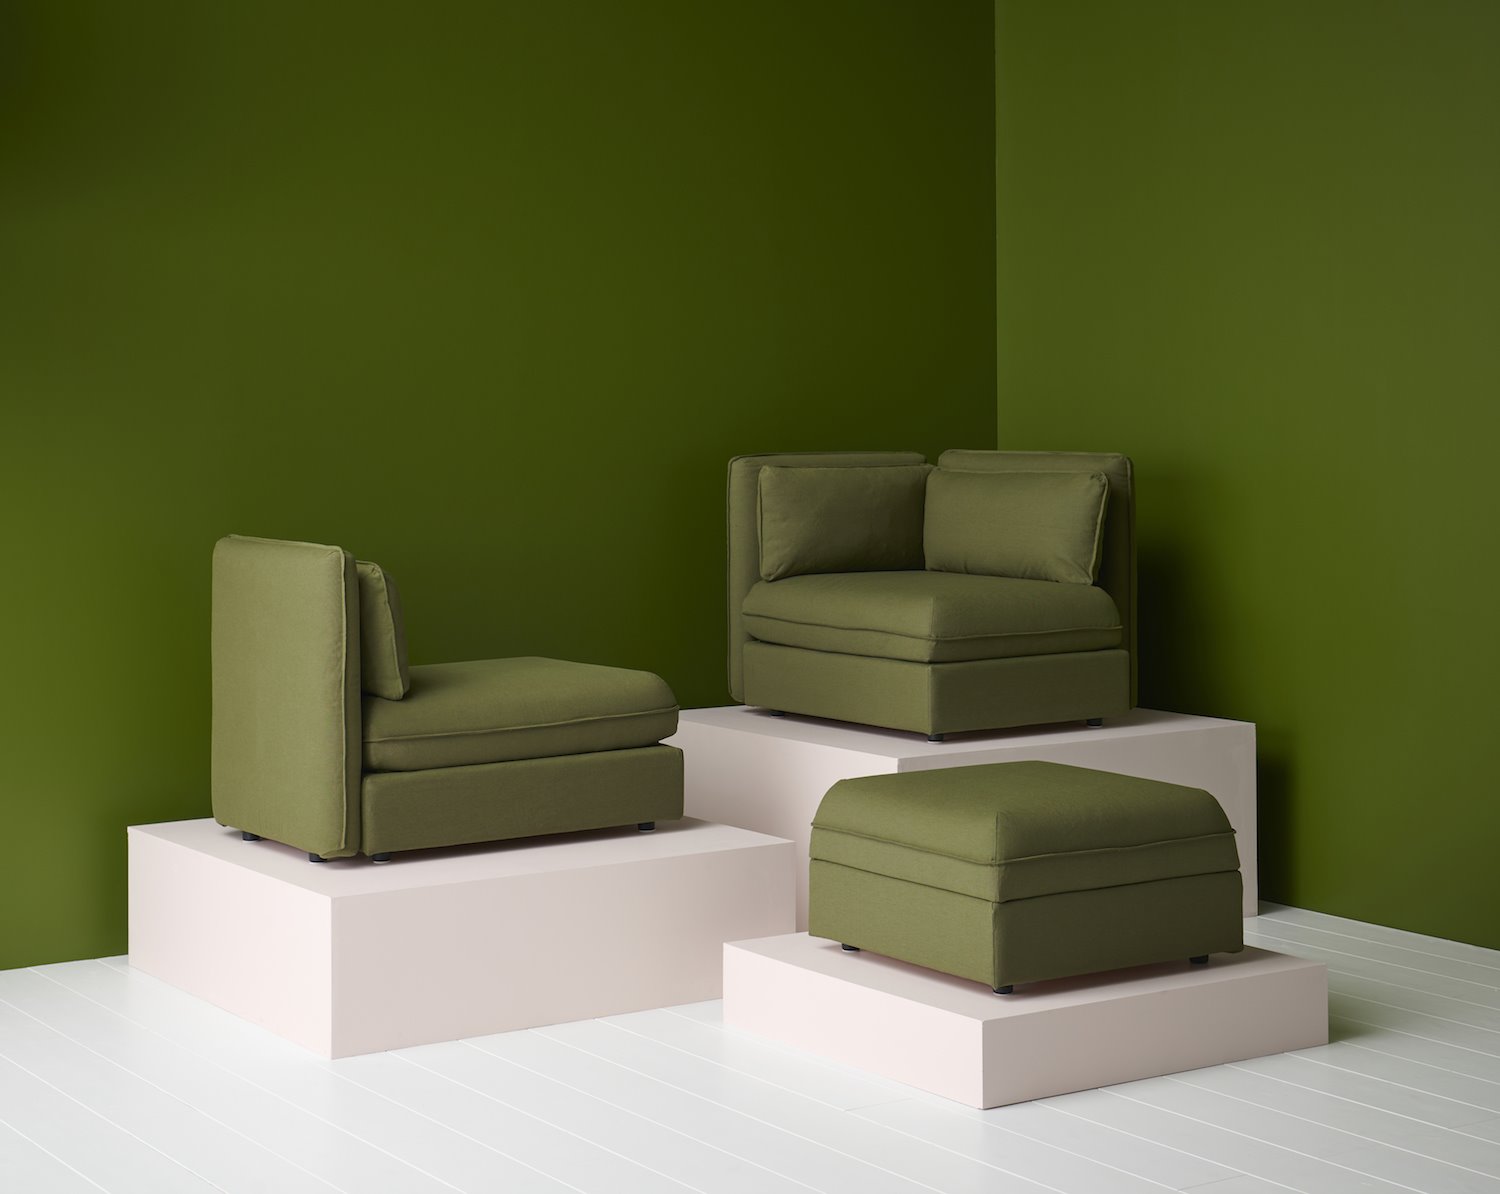 Sofa modular de color verde de Ikea